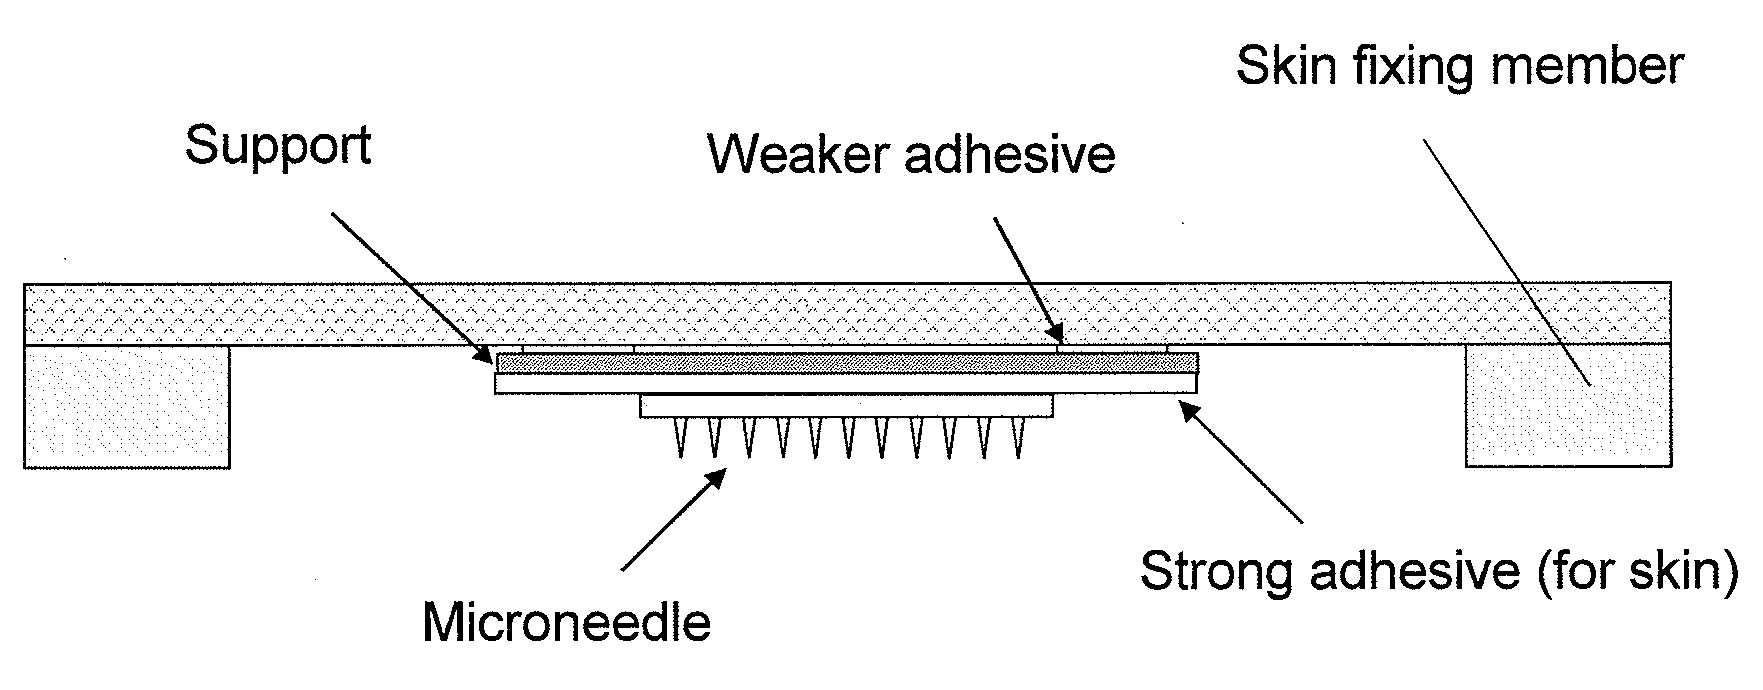 Applicator device of pinholder type microneedle